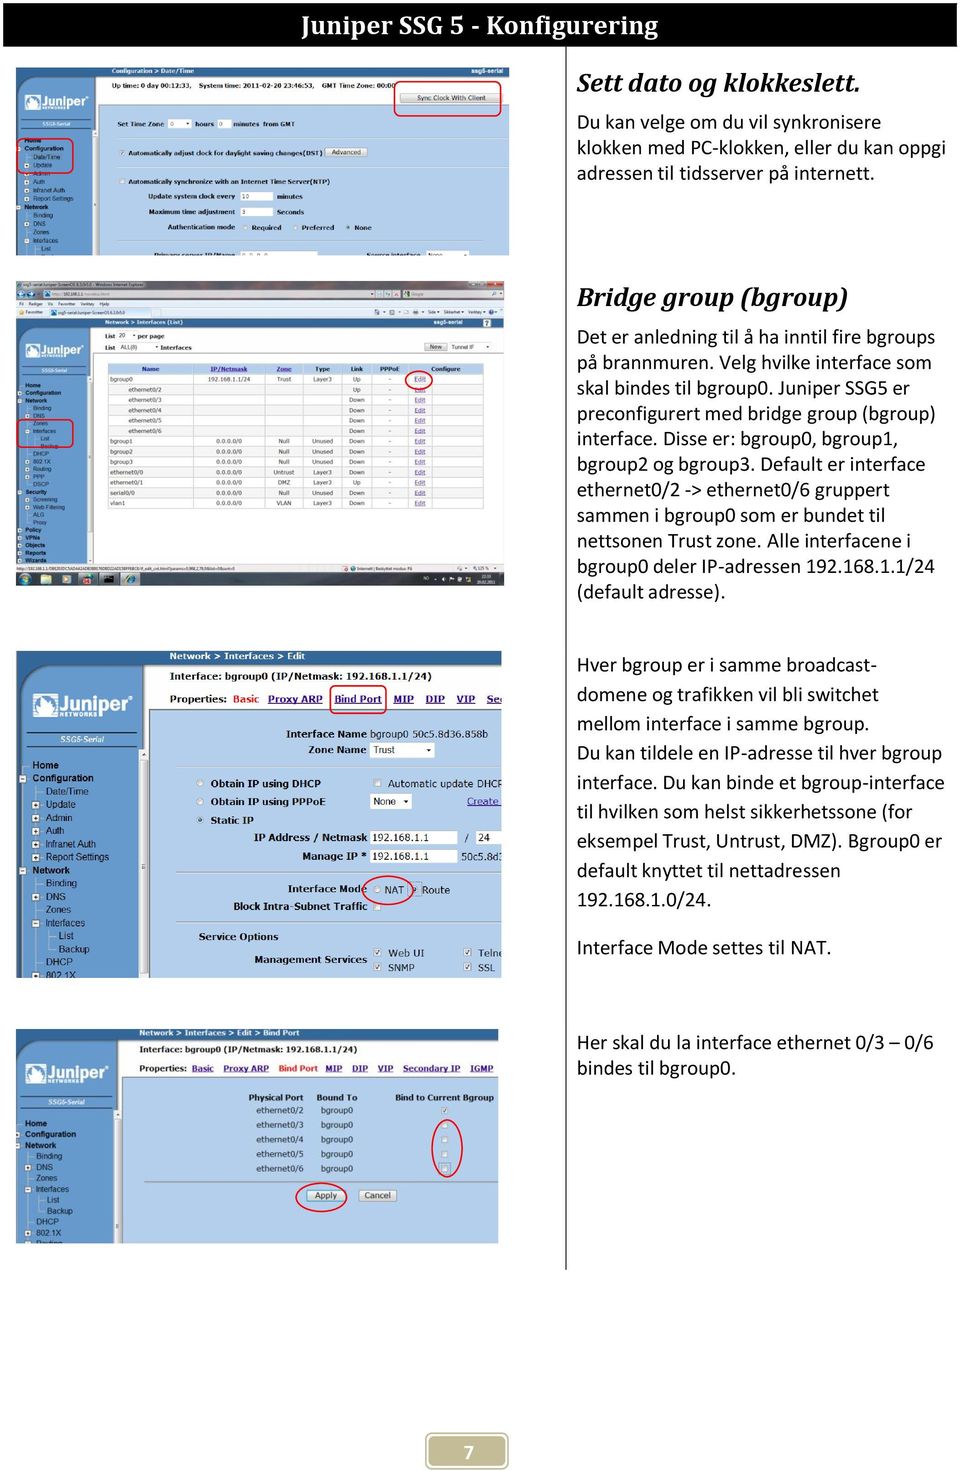 Juniper SSG5 er preconfigurert med bridge group (bgroup) interface. Disse er: bgroup0, bgroup1, bgroup2 og bgroup3.